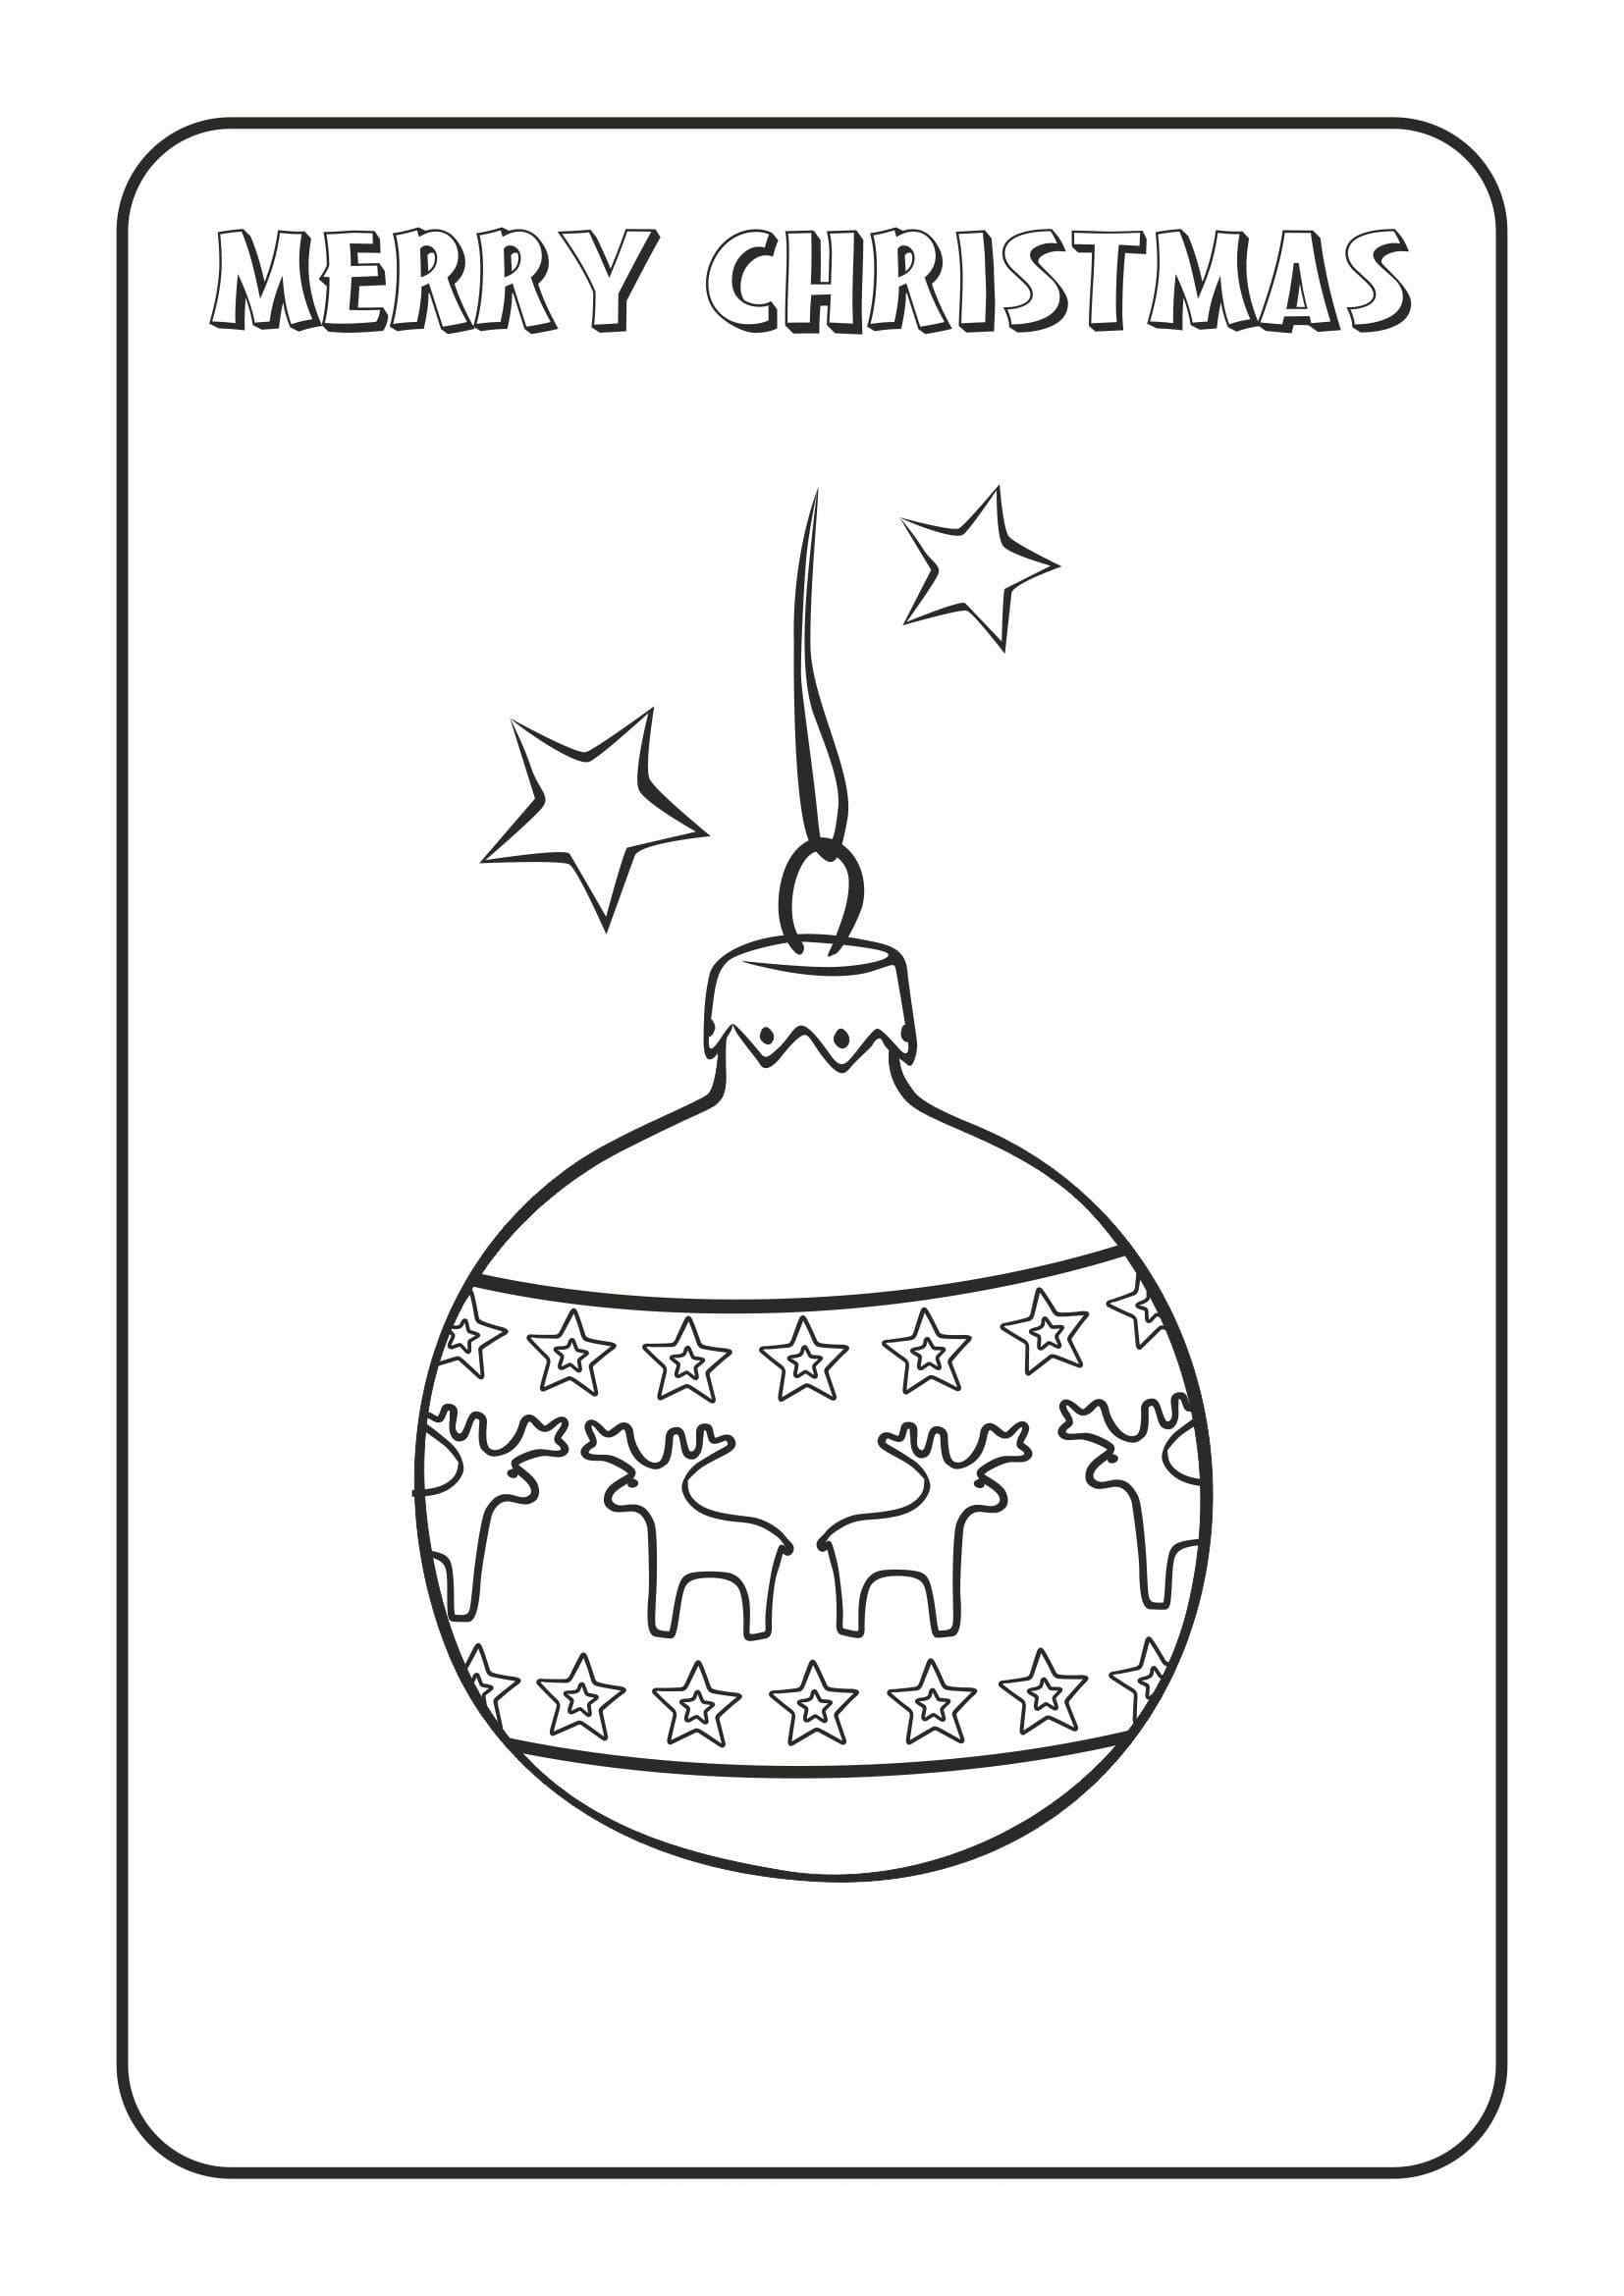 Greeting Card With A Christmas Ball